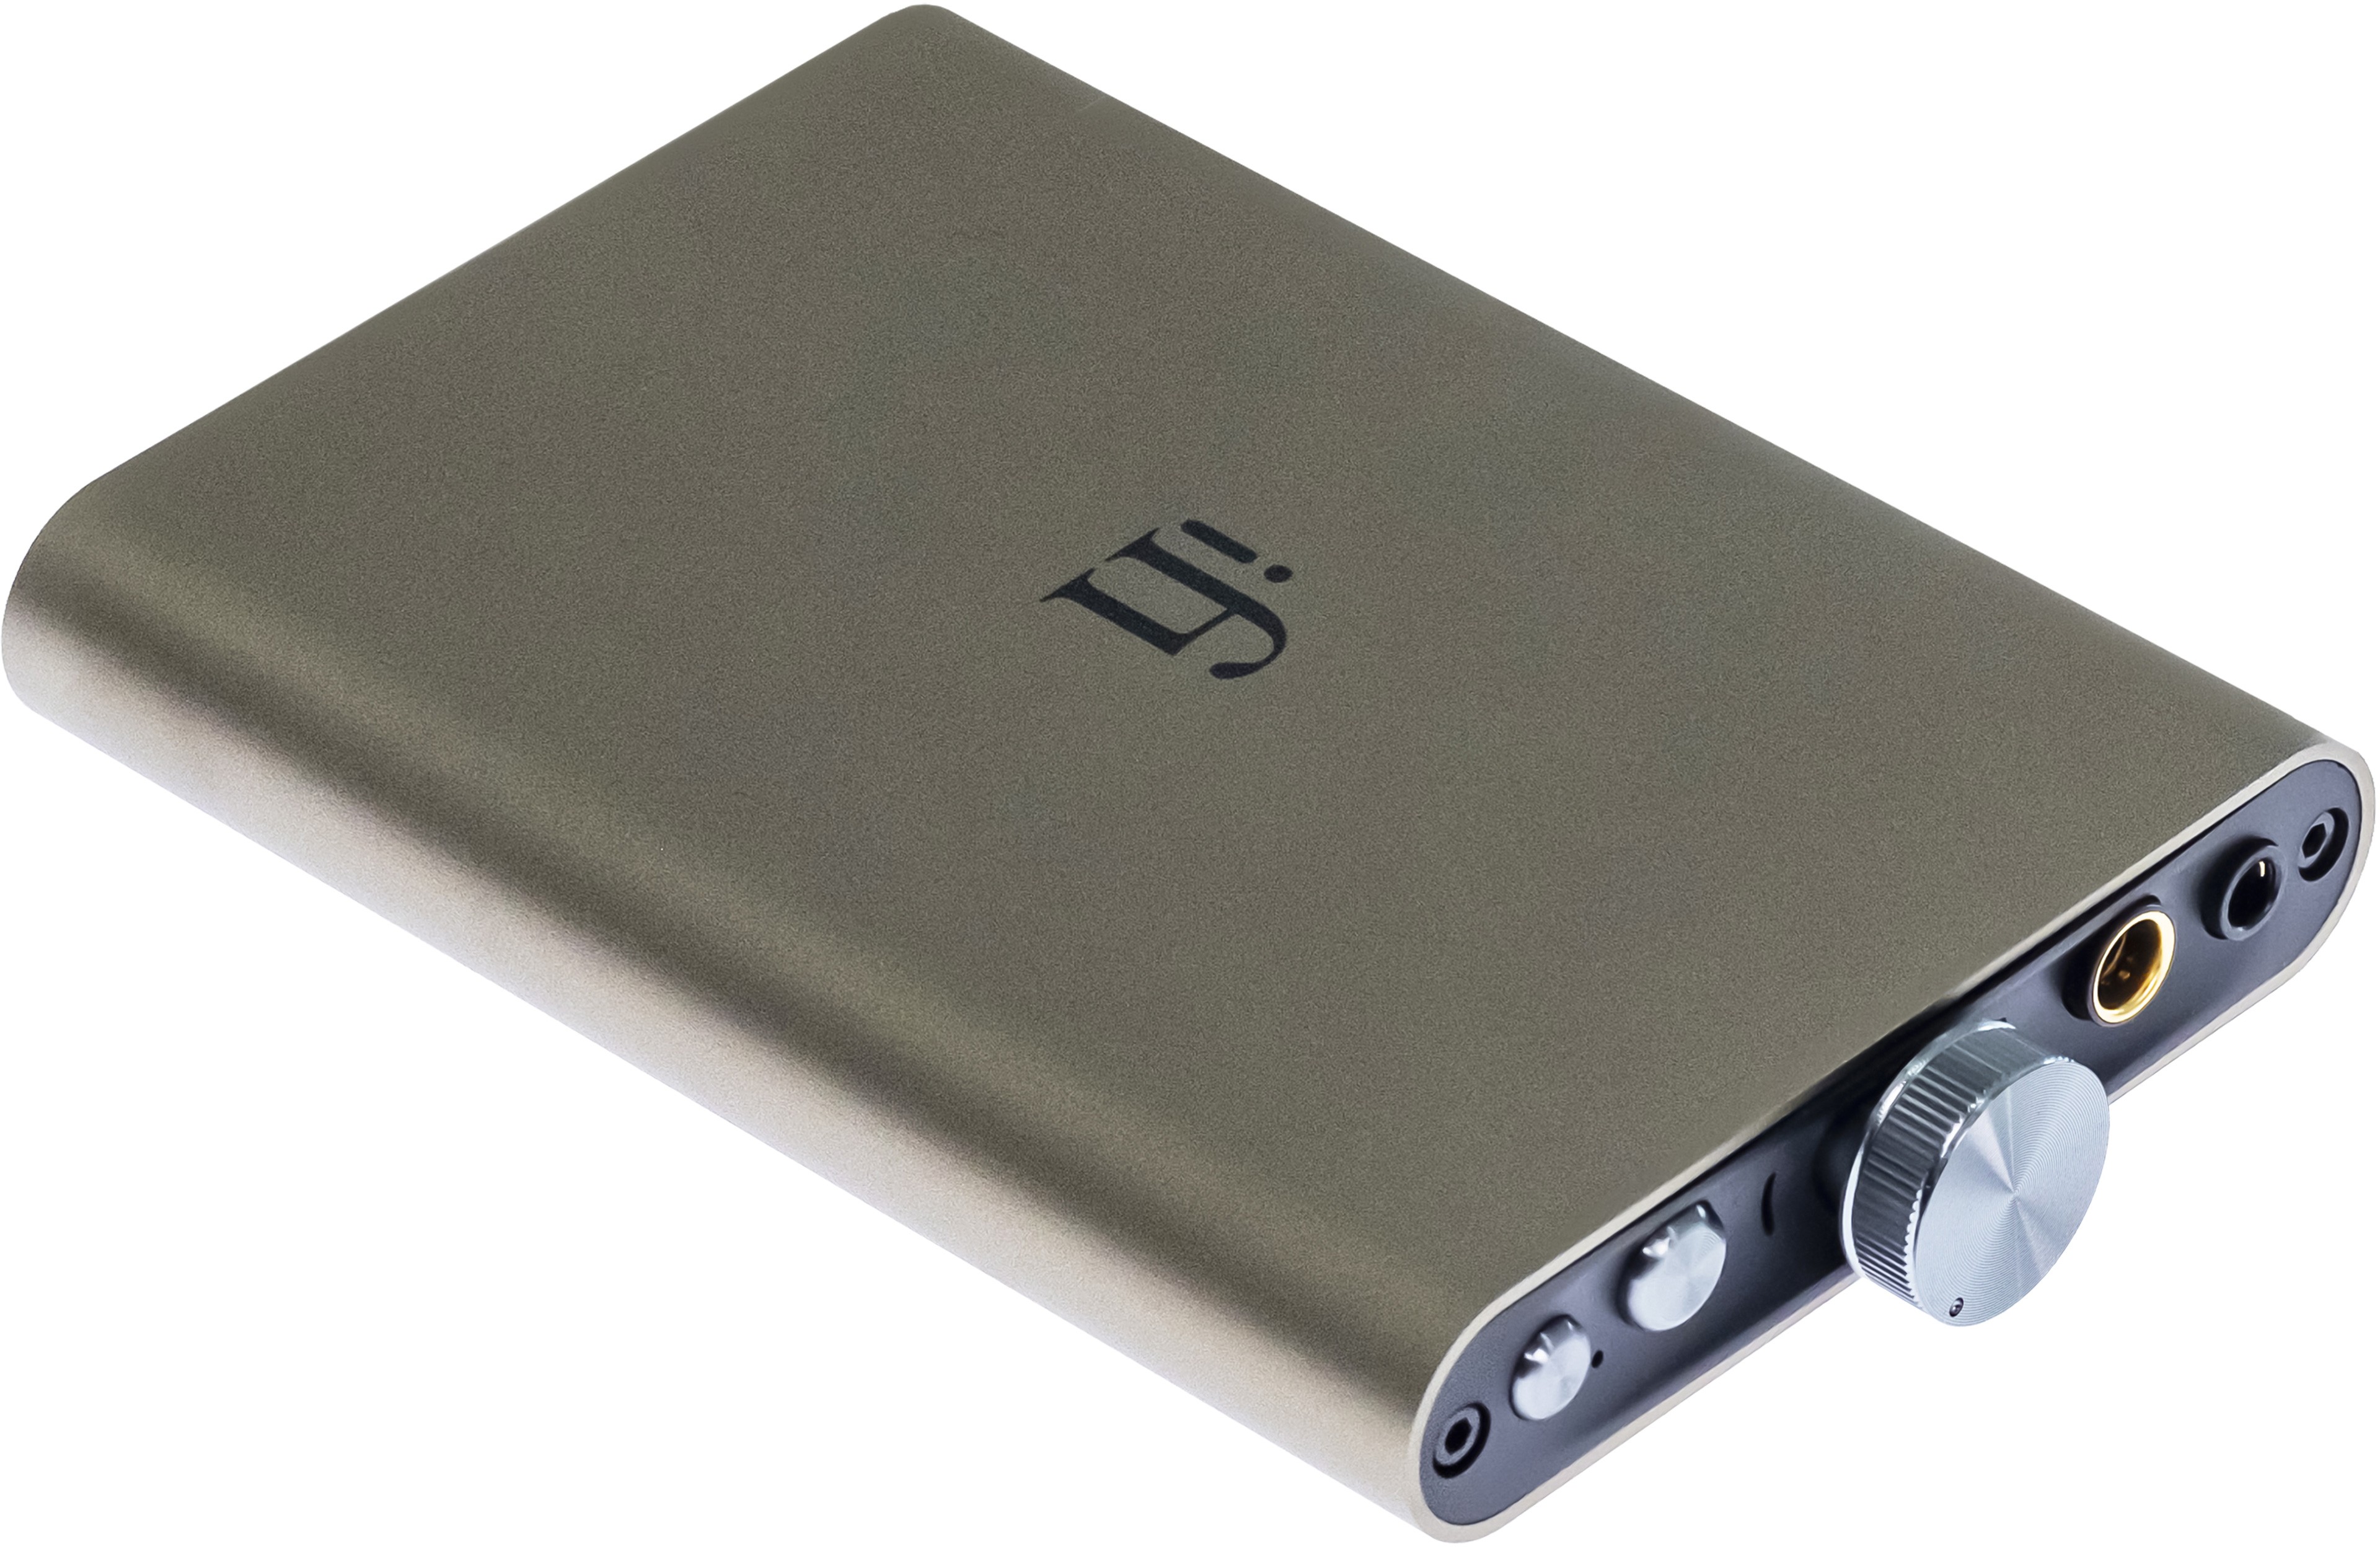 IFI AUDIO HIP DAC 3 Portable Balanced DAC Headphone Amplifier Burr Brown XMOS 32bit 384kHz DSD256 MQA